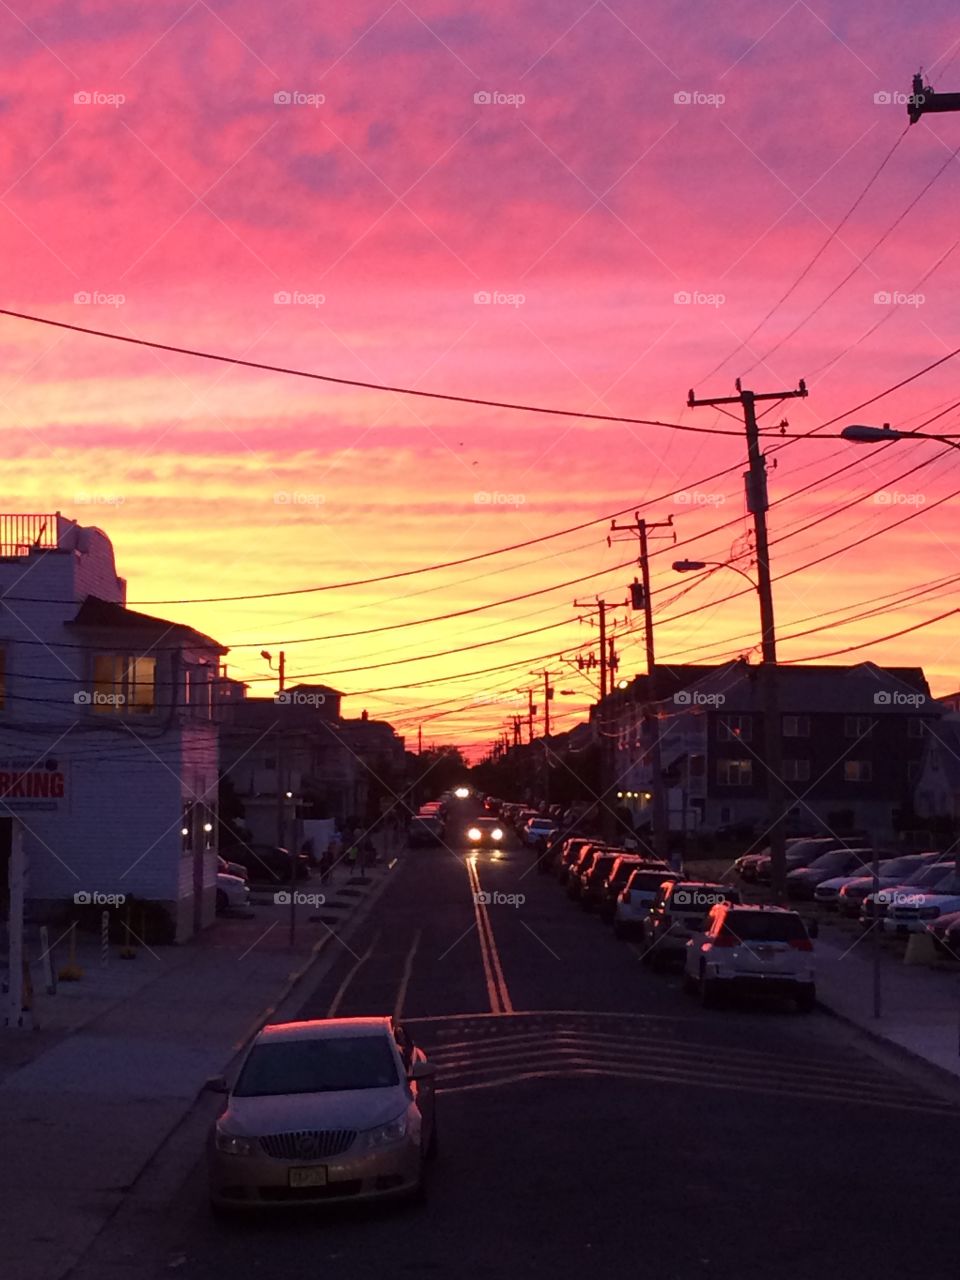 Wildwood street view with a beautiful sunset sky 